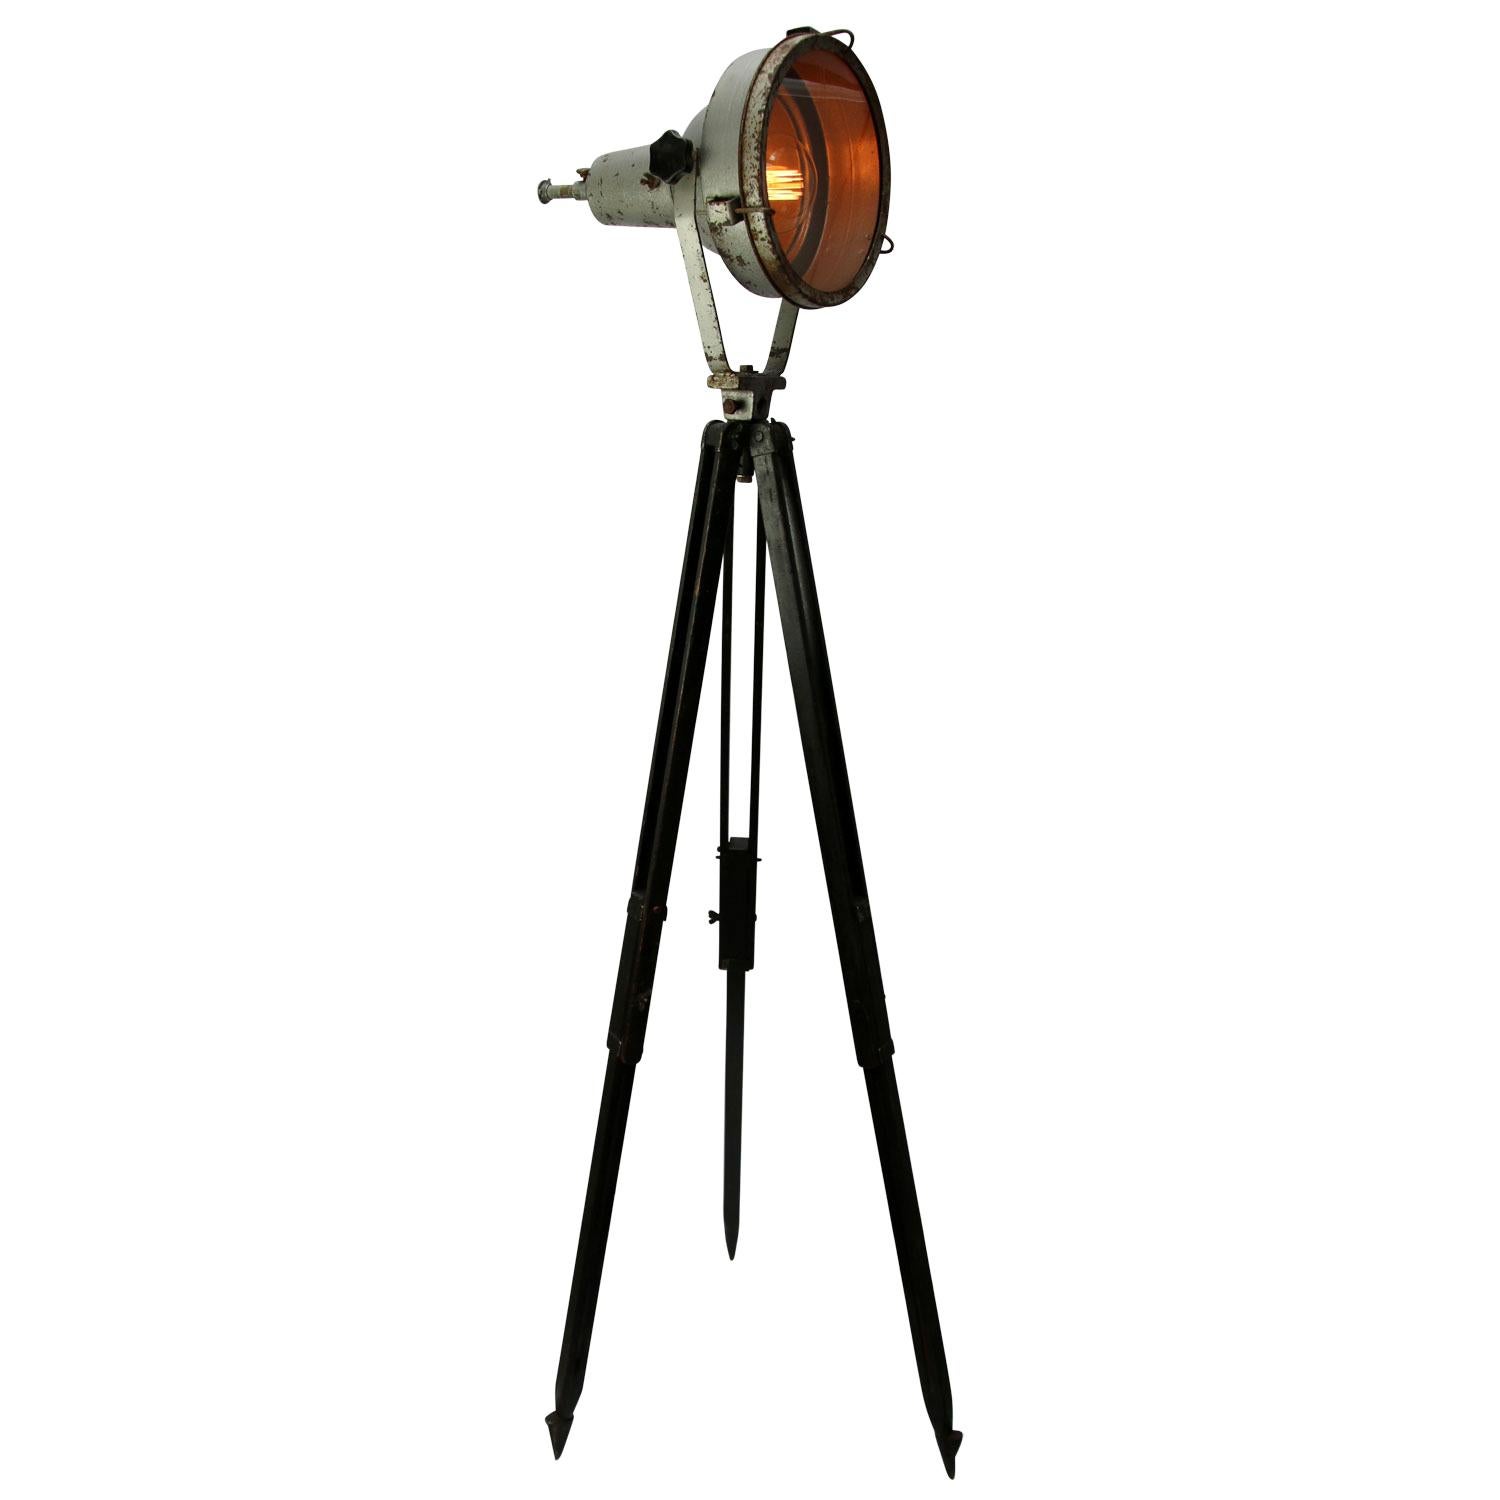 Holz-Stehlampe, dreibein, grau, Aluminium, Vintage, Industrie, Klarglas